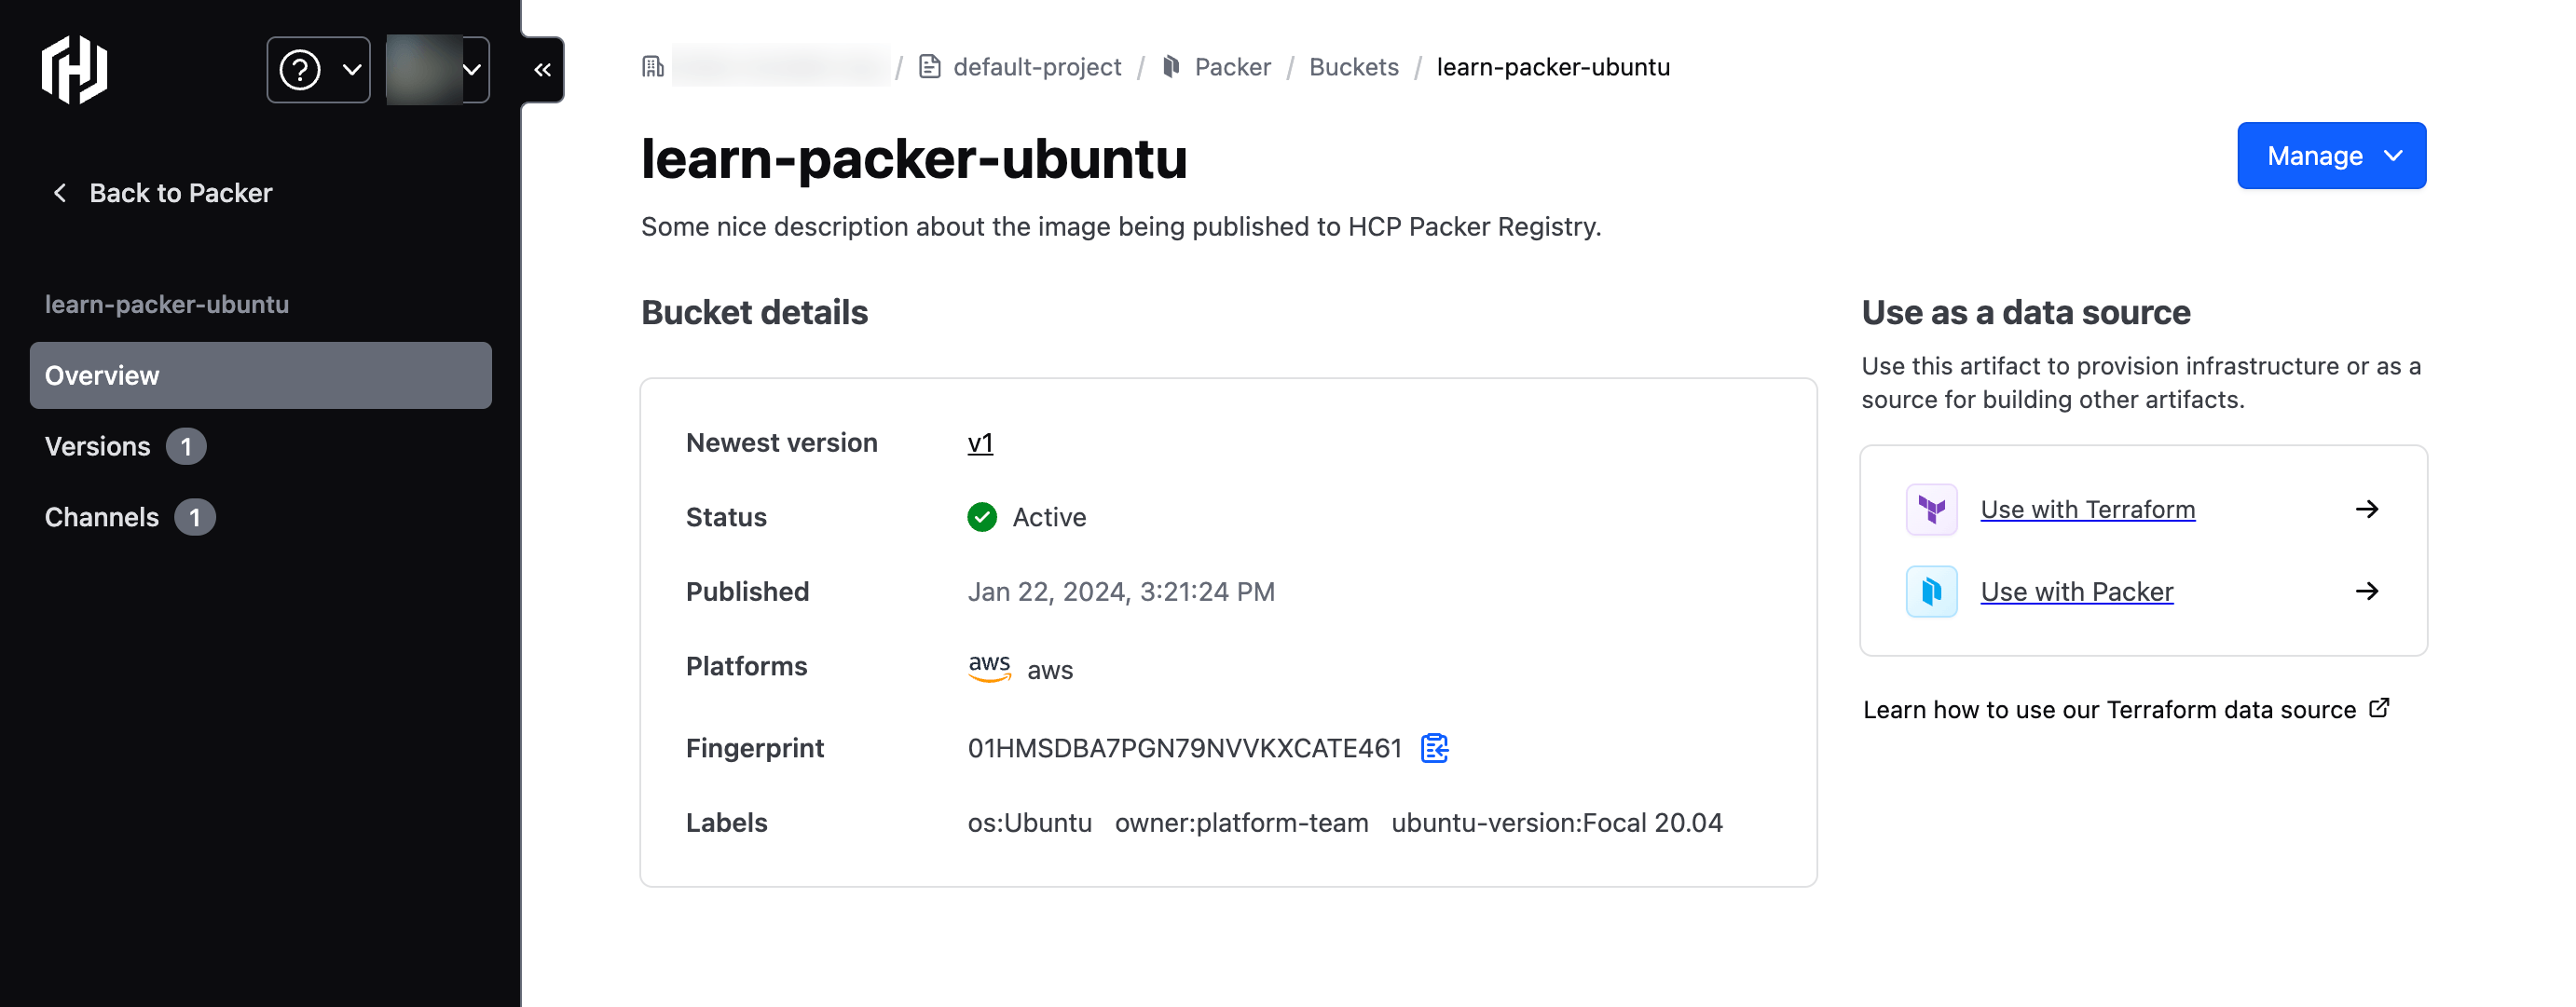 Main page for learn-packer-ubuntu bucket